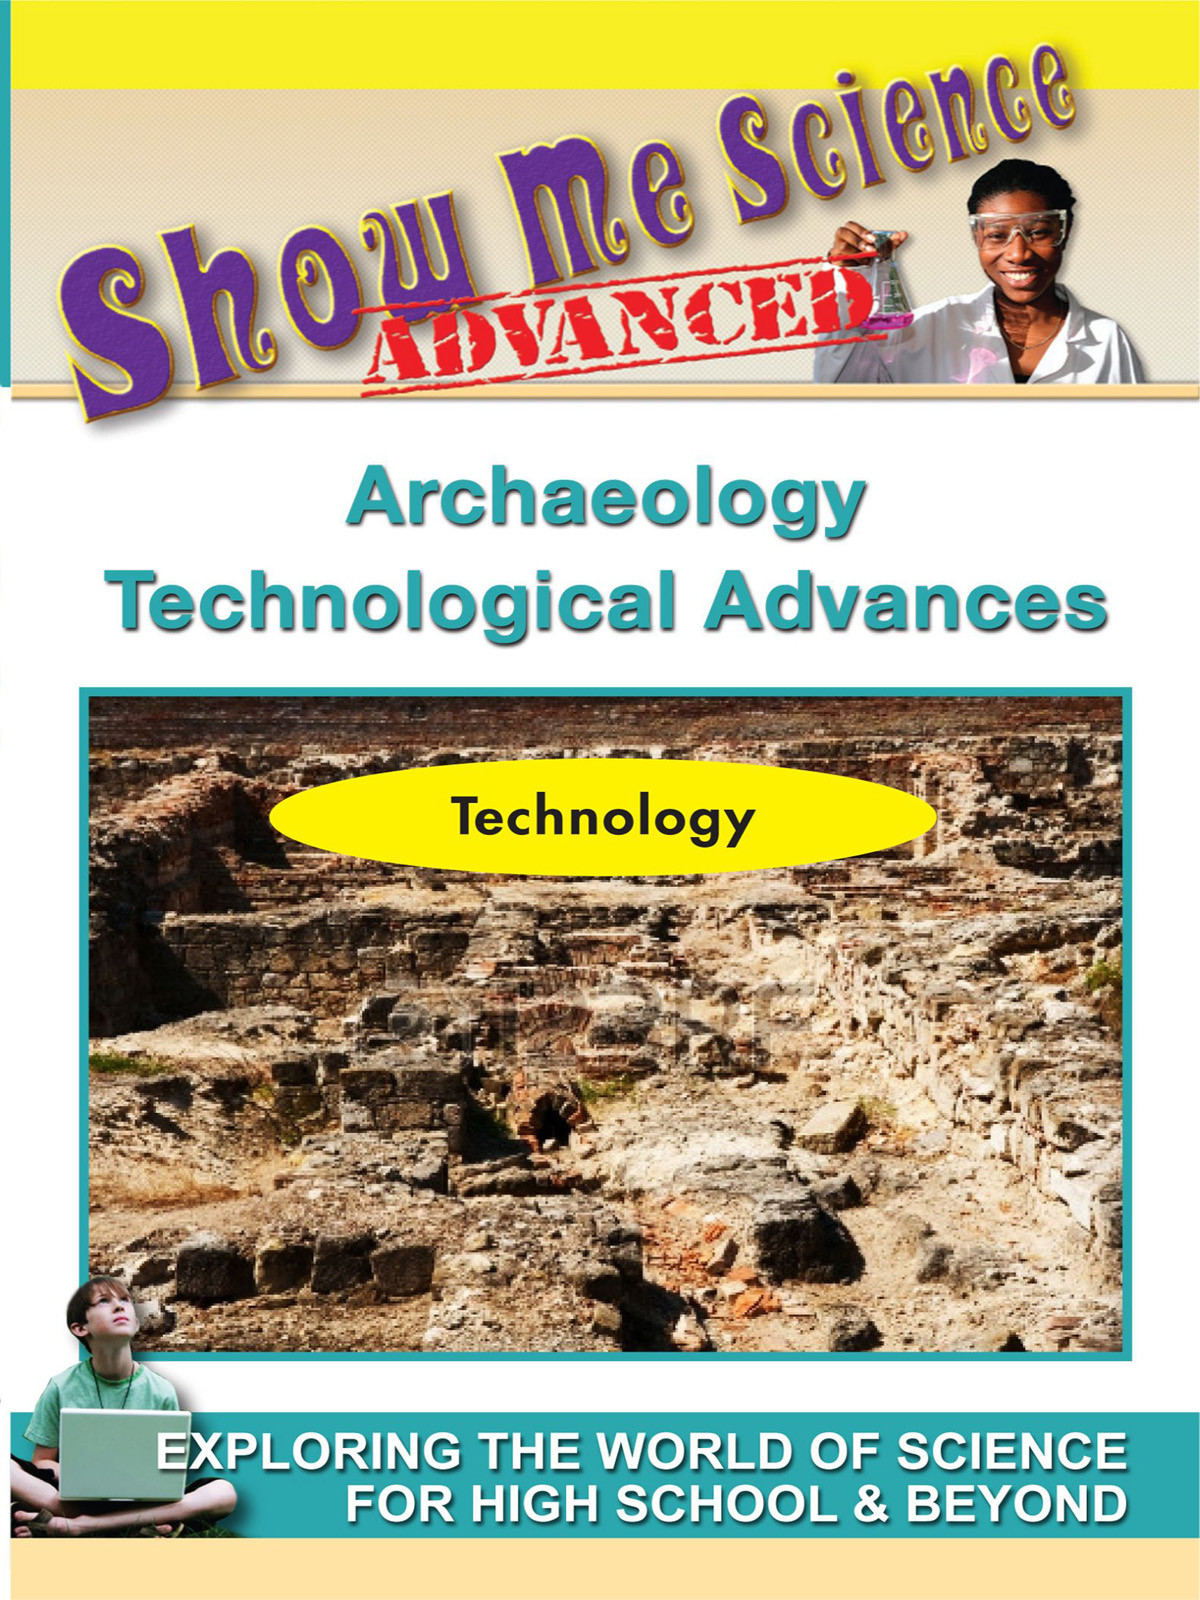 K4632 - Science Technology Archaeology Advances